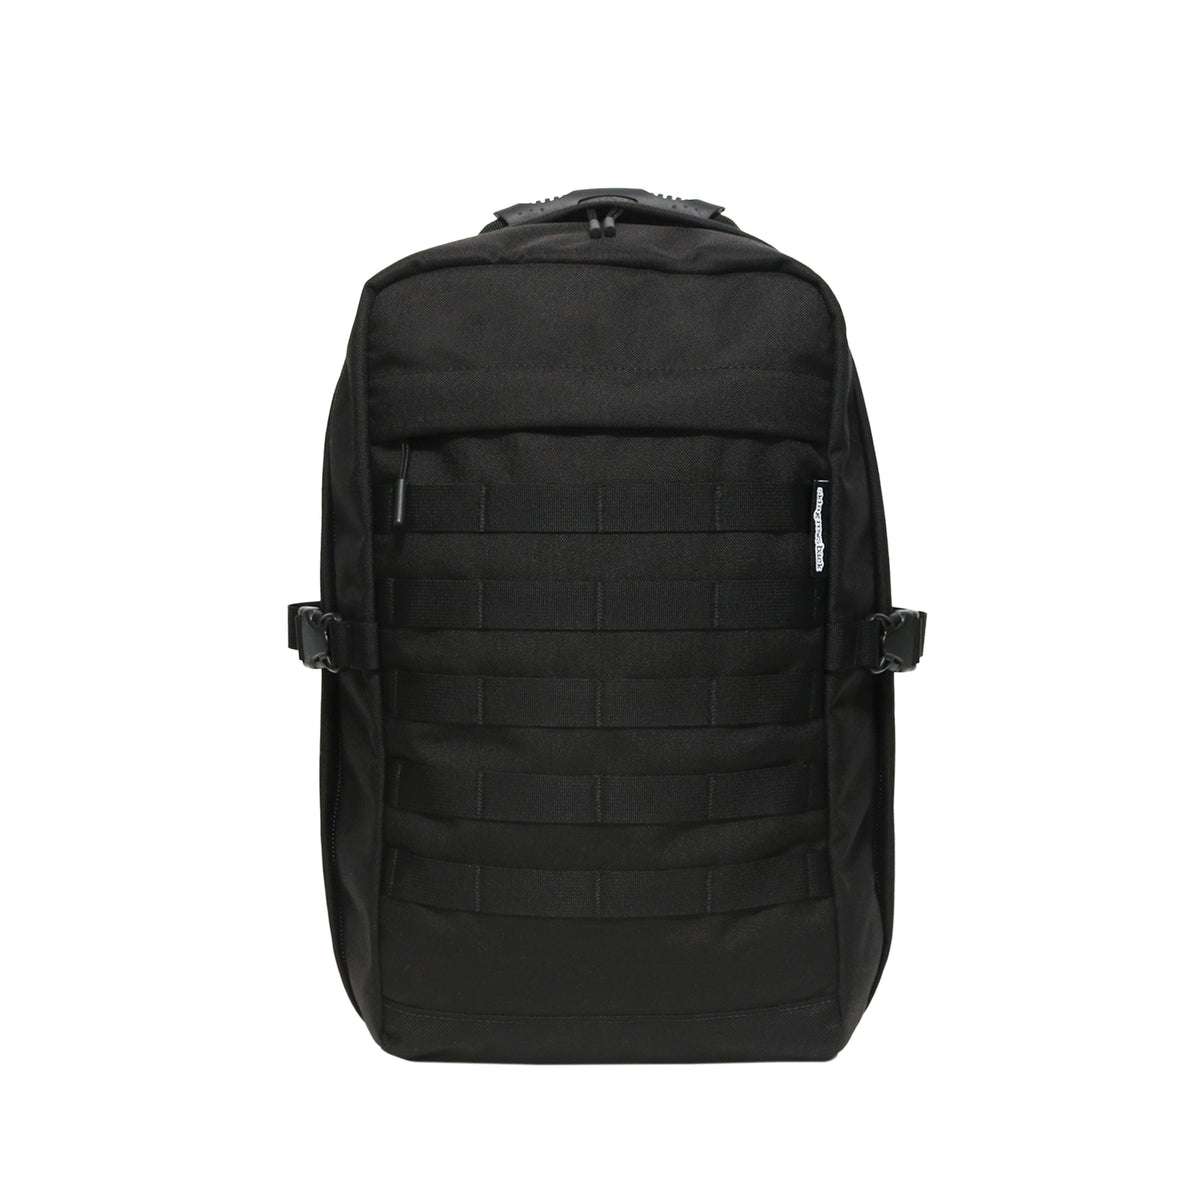 skingrowsback MIDPAK 23 litre Backpack black